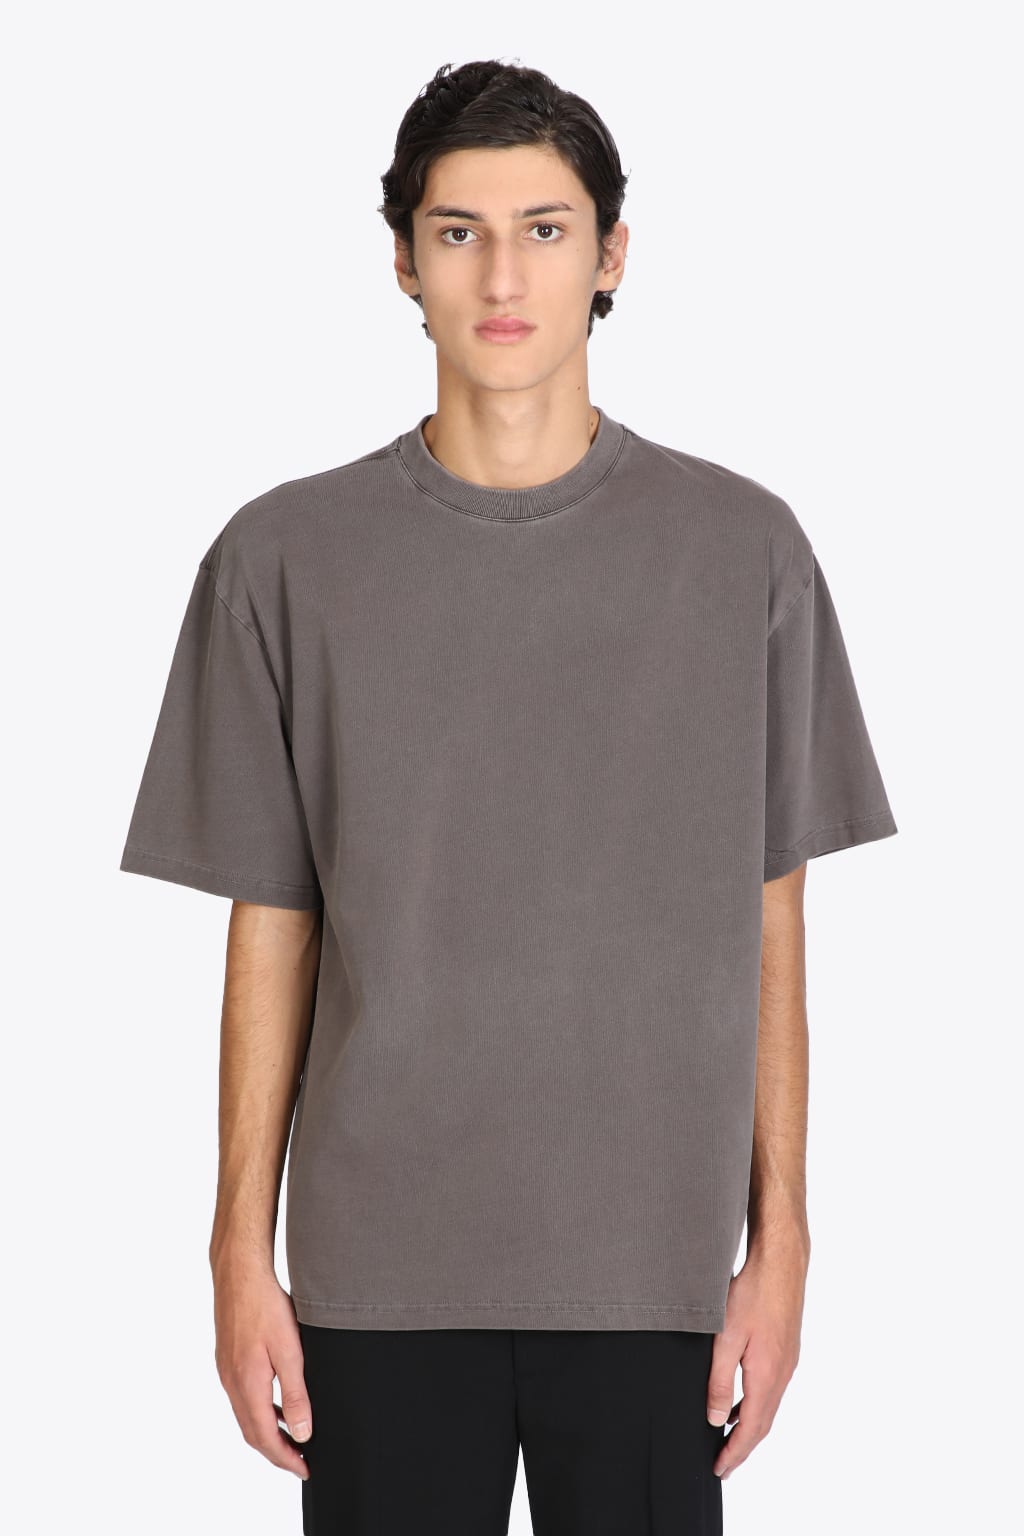 Axel Arigato Origin T-shirt Brown dyed cotton t-shirt with back logo - Origin t-shirt